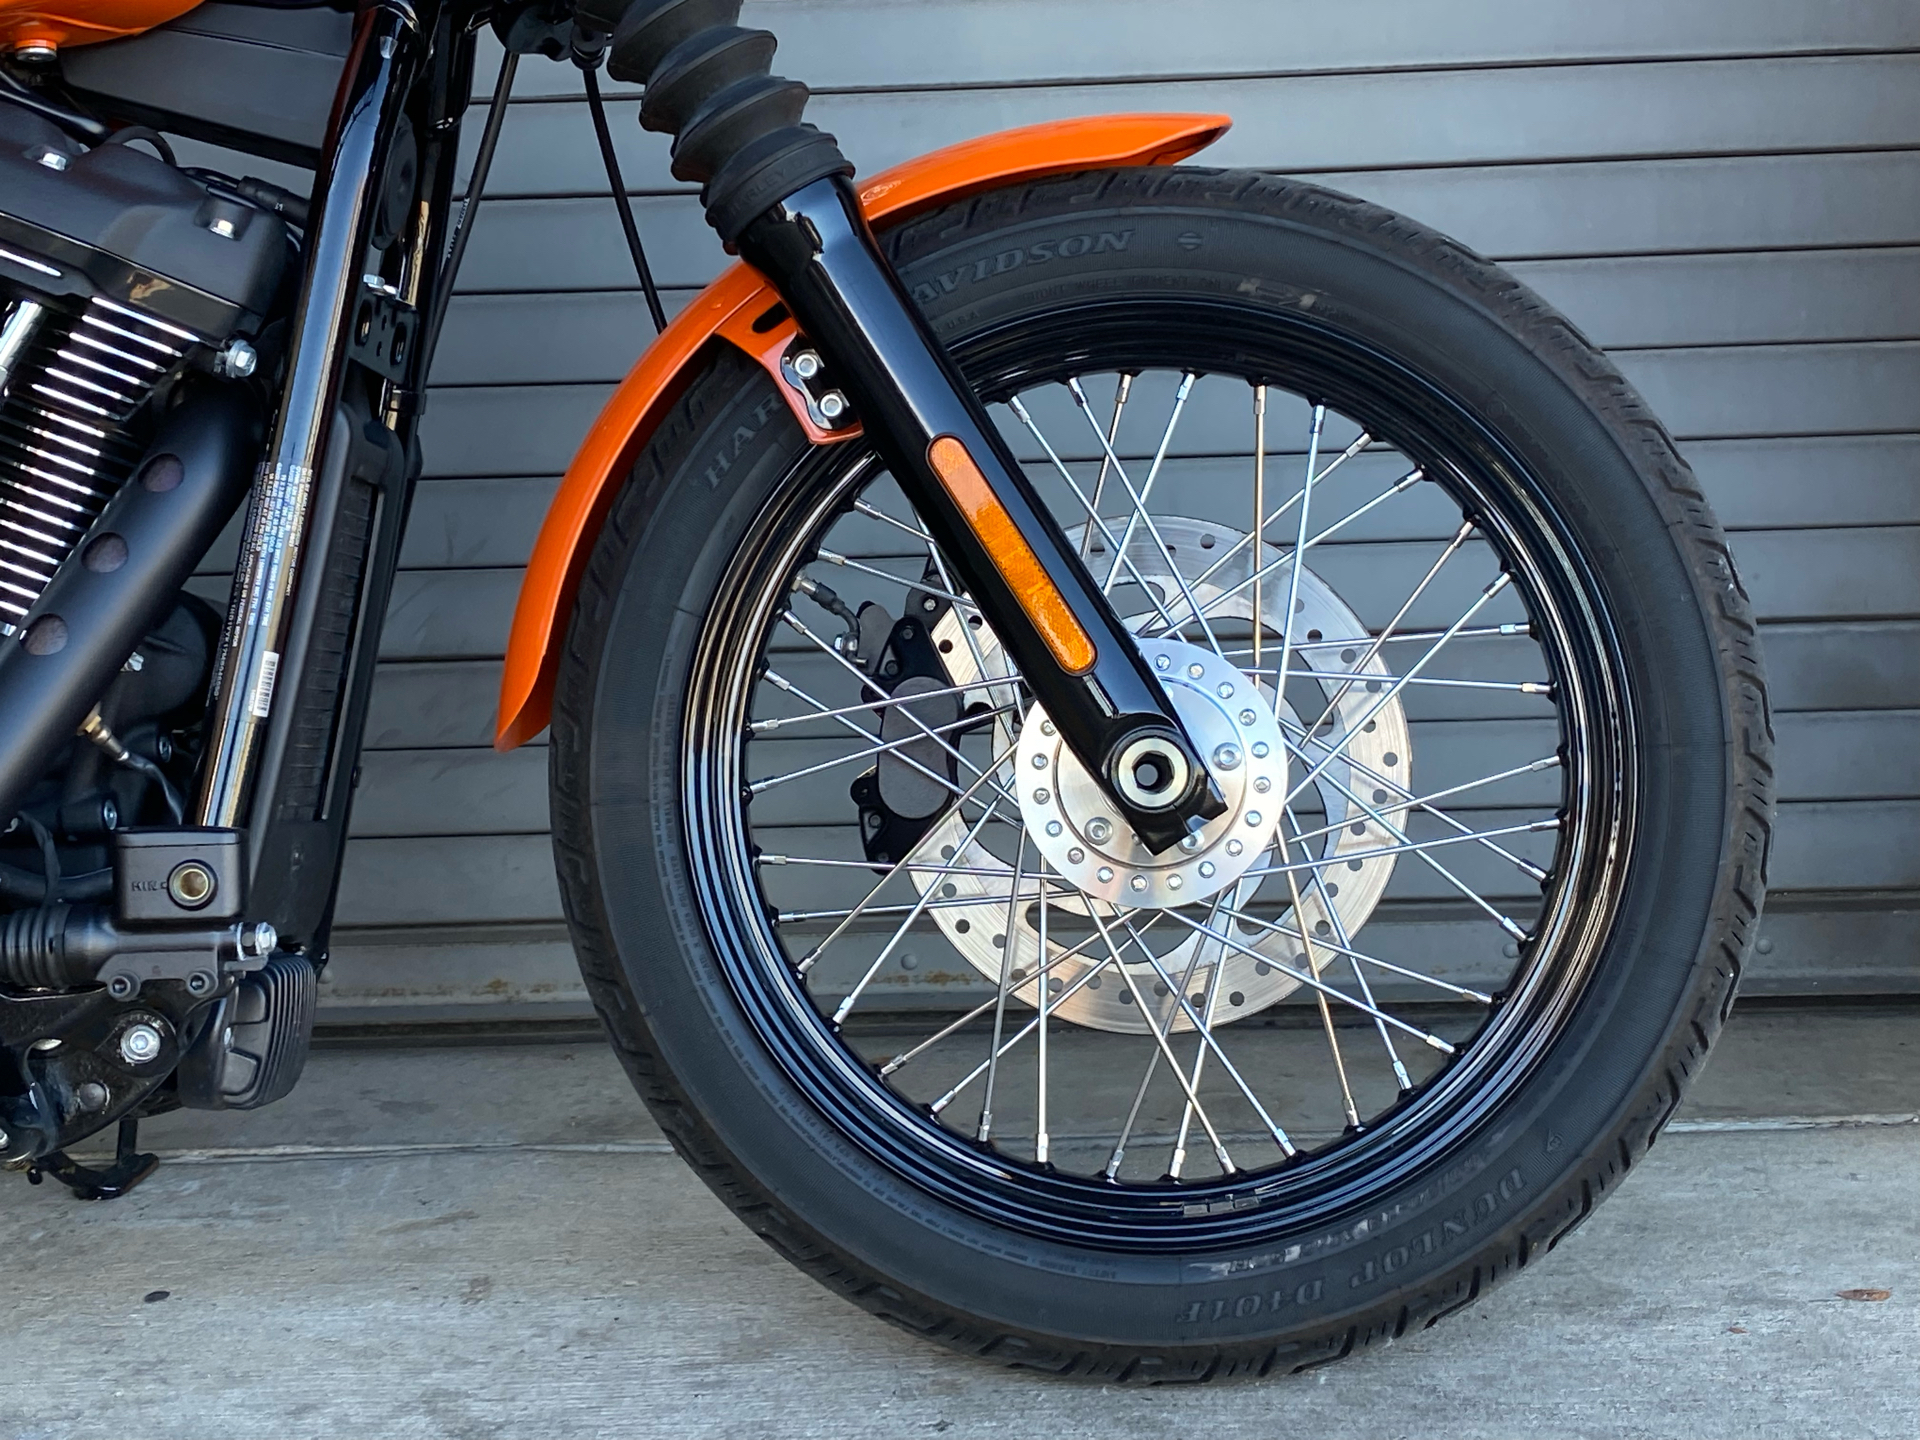 2021 Harley-Davidson Street Bob® 114 in Carrollton, Texas - Photo 4